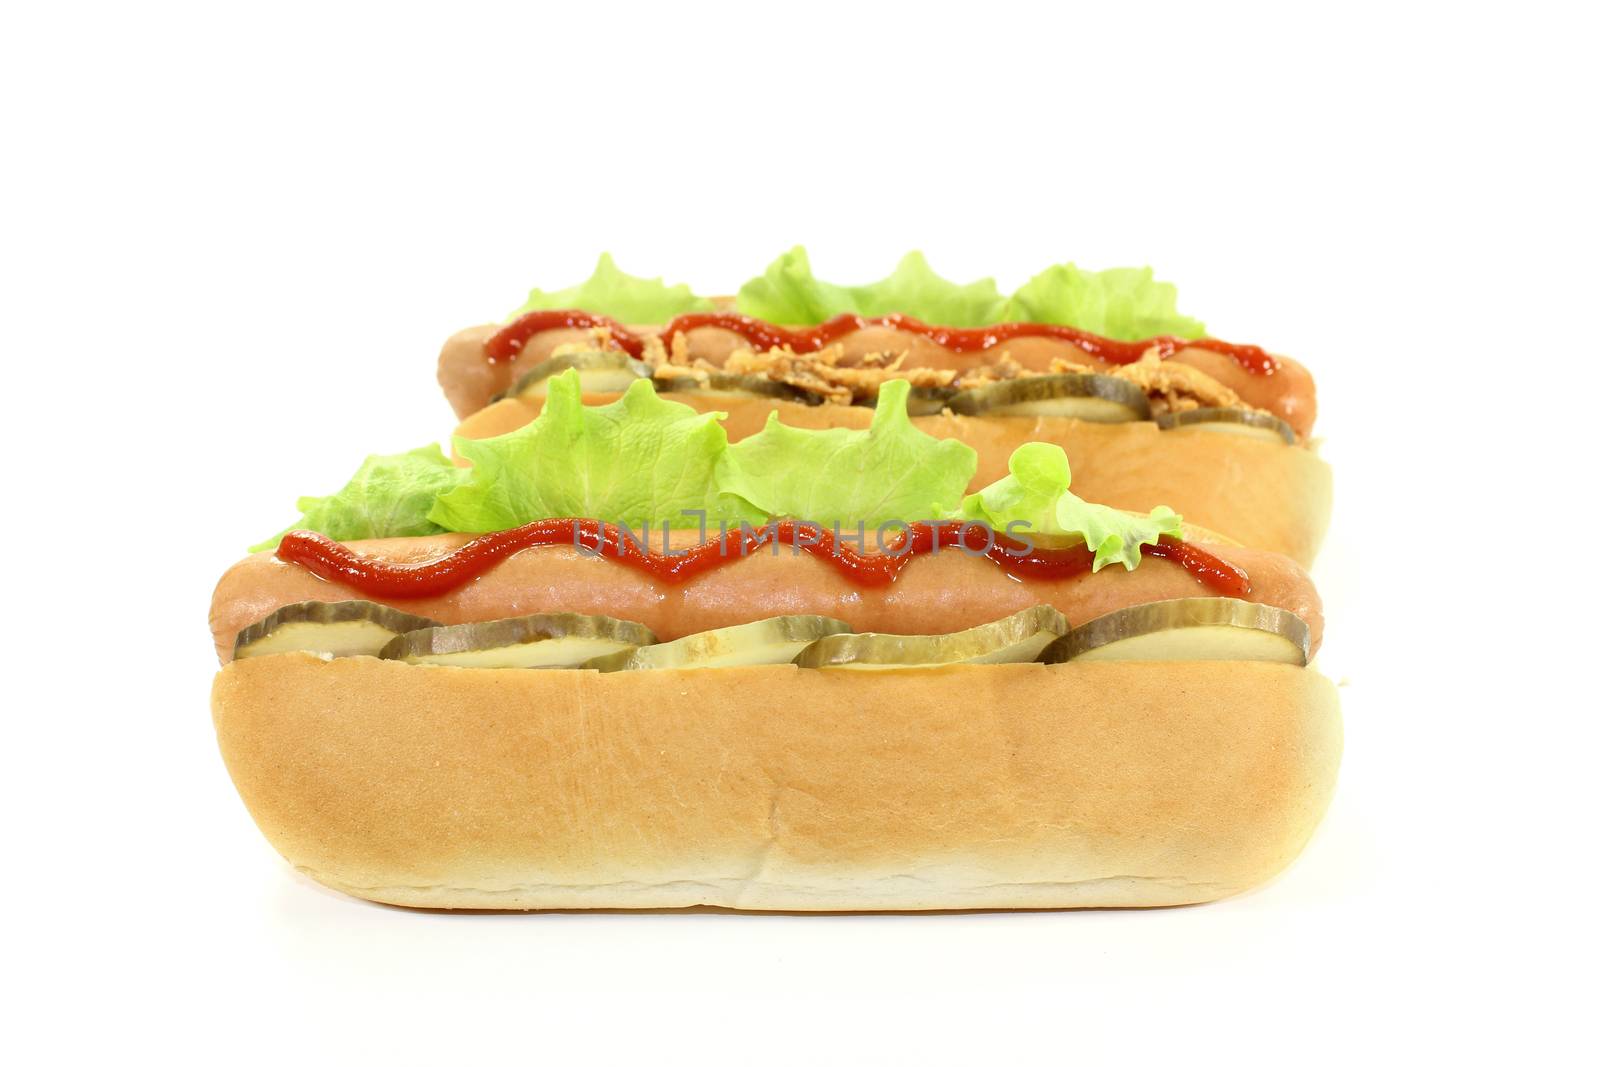 Hot dog by silencefoto